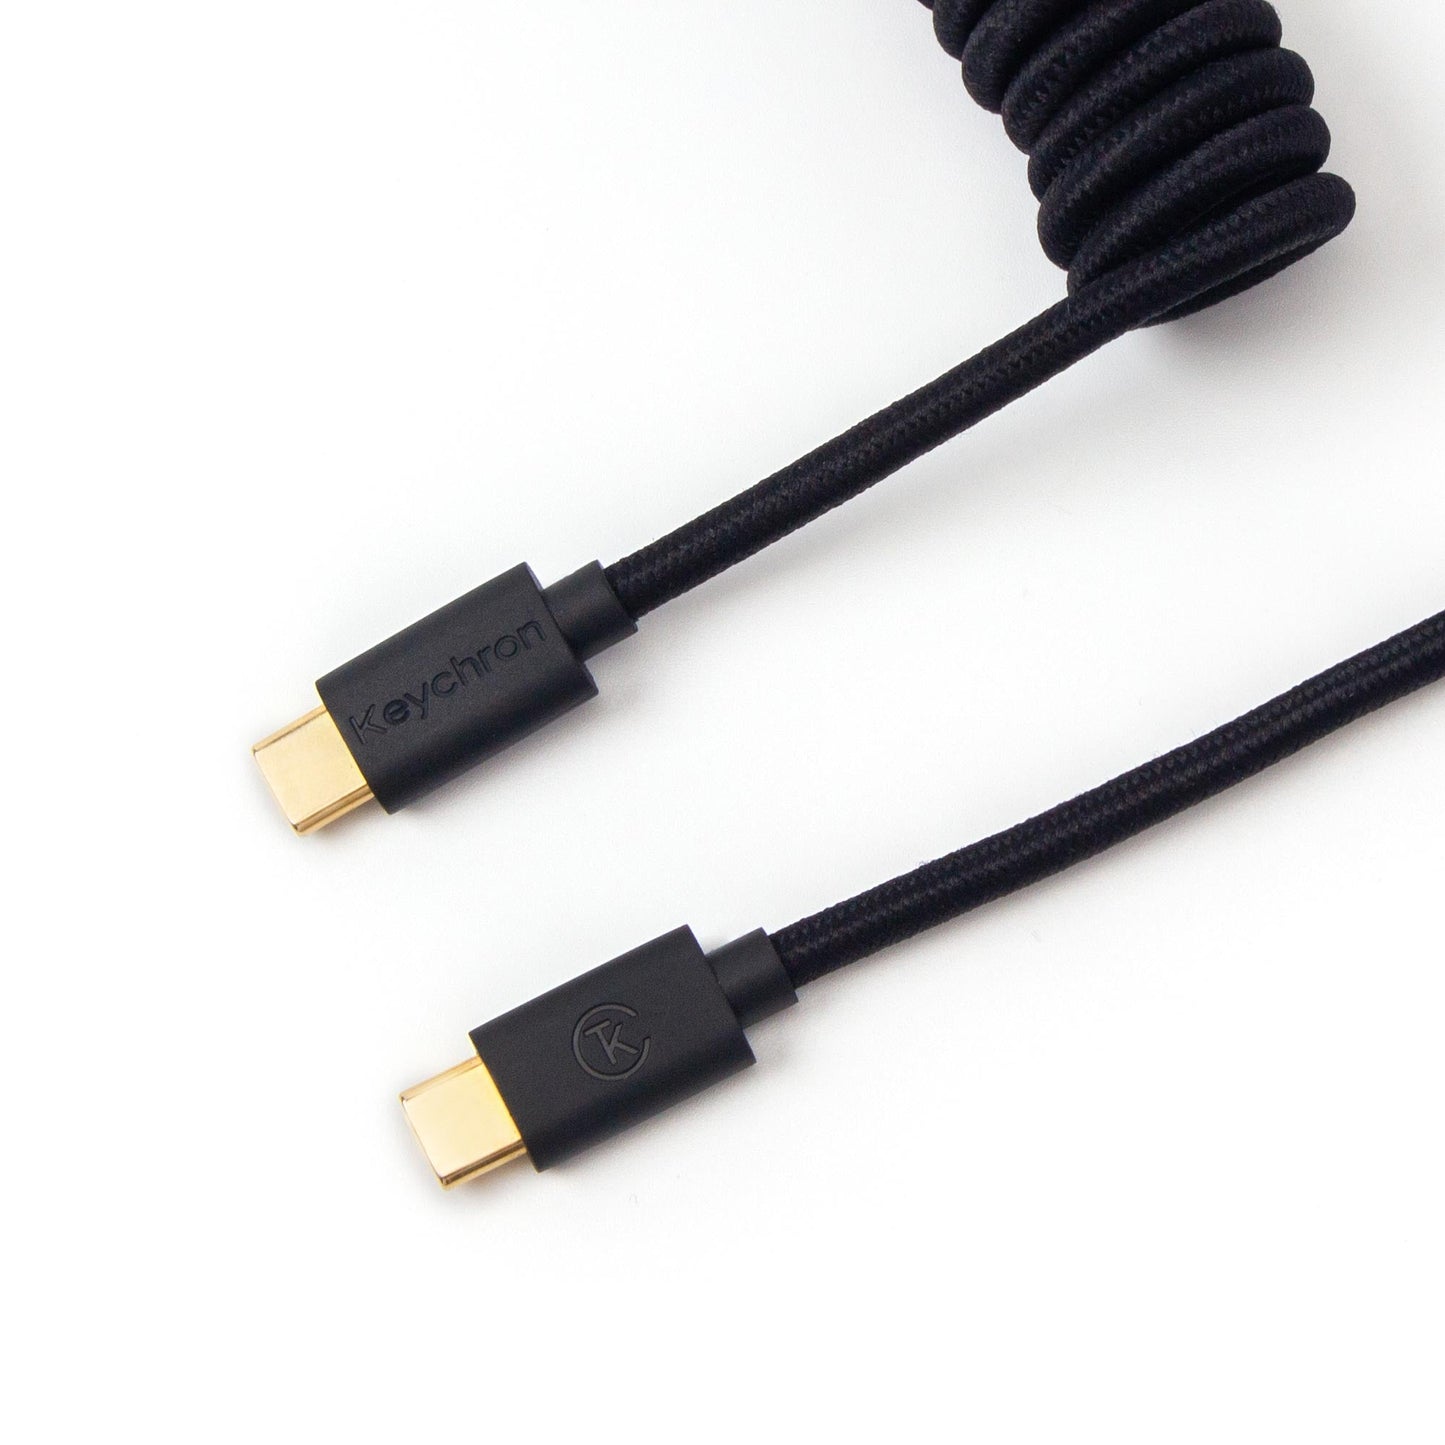 Keychron custom coiled aviator USB type-C cable black color